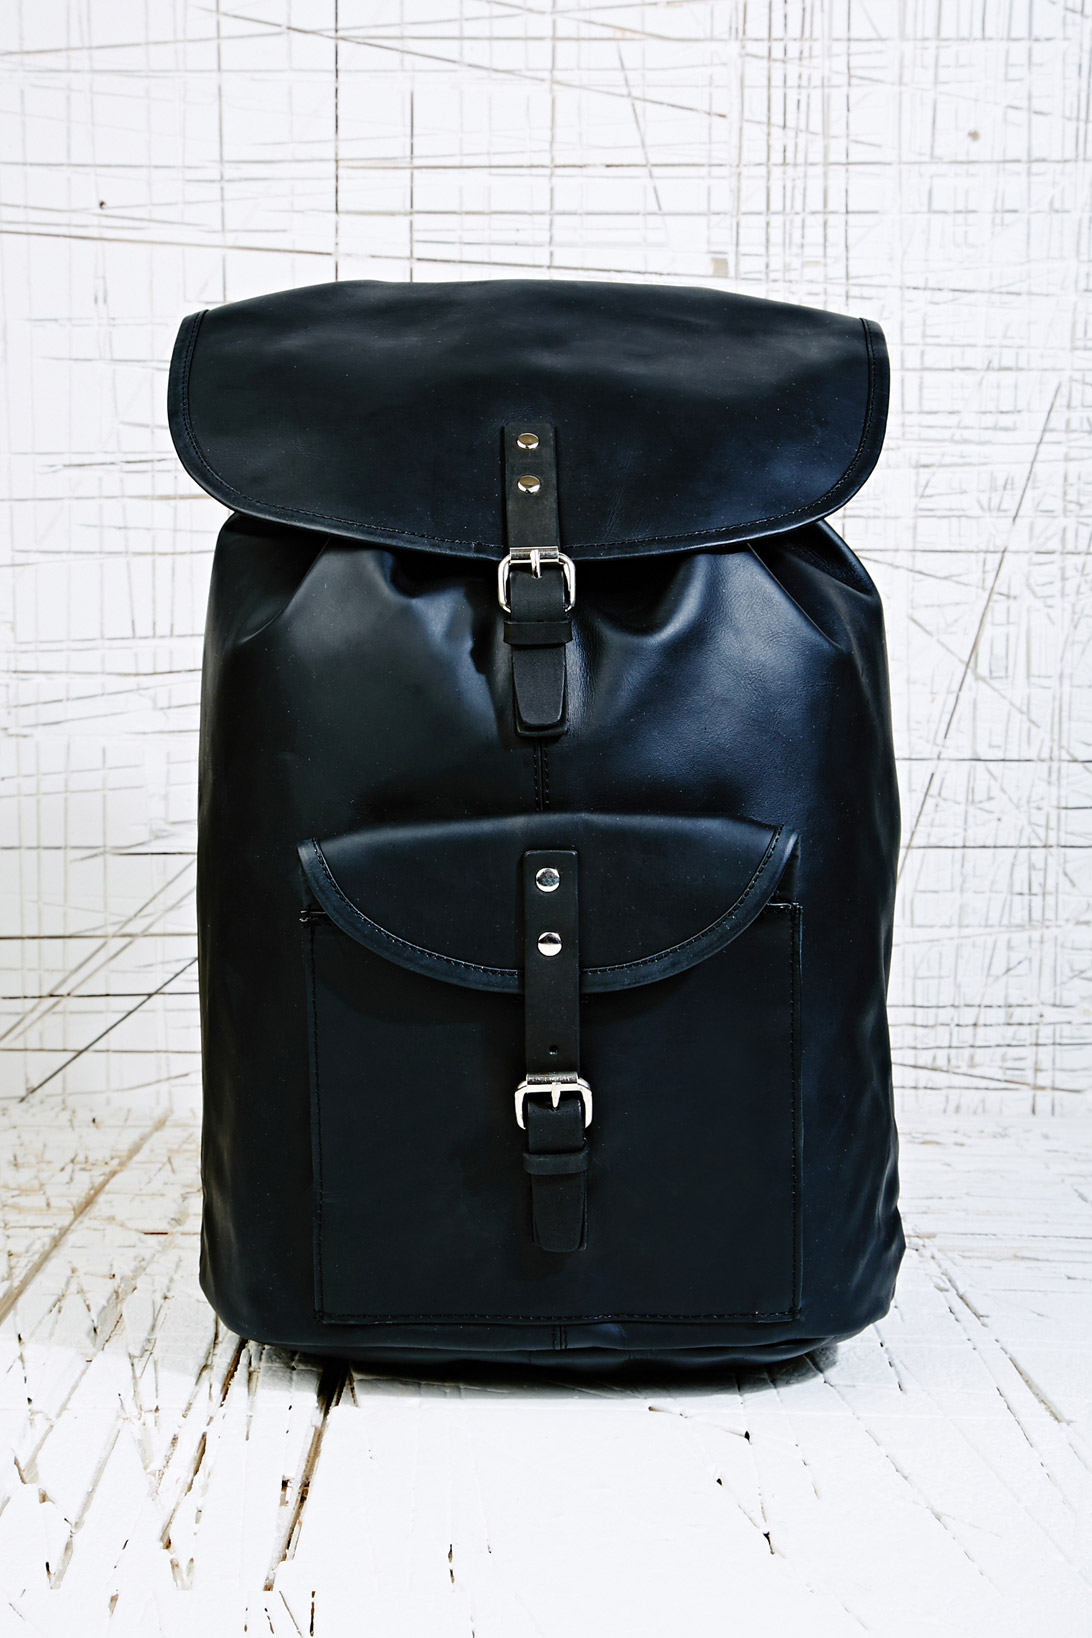 Sandqvist Helmer Leather Backpack in Black in Black for Men - Lyst